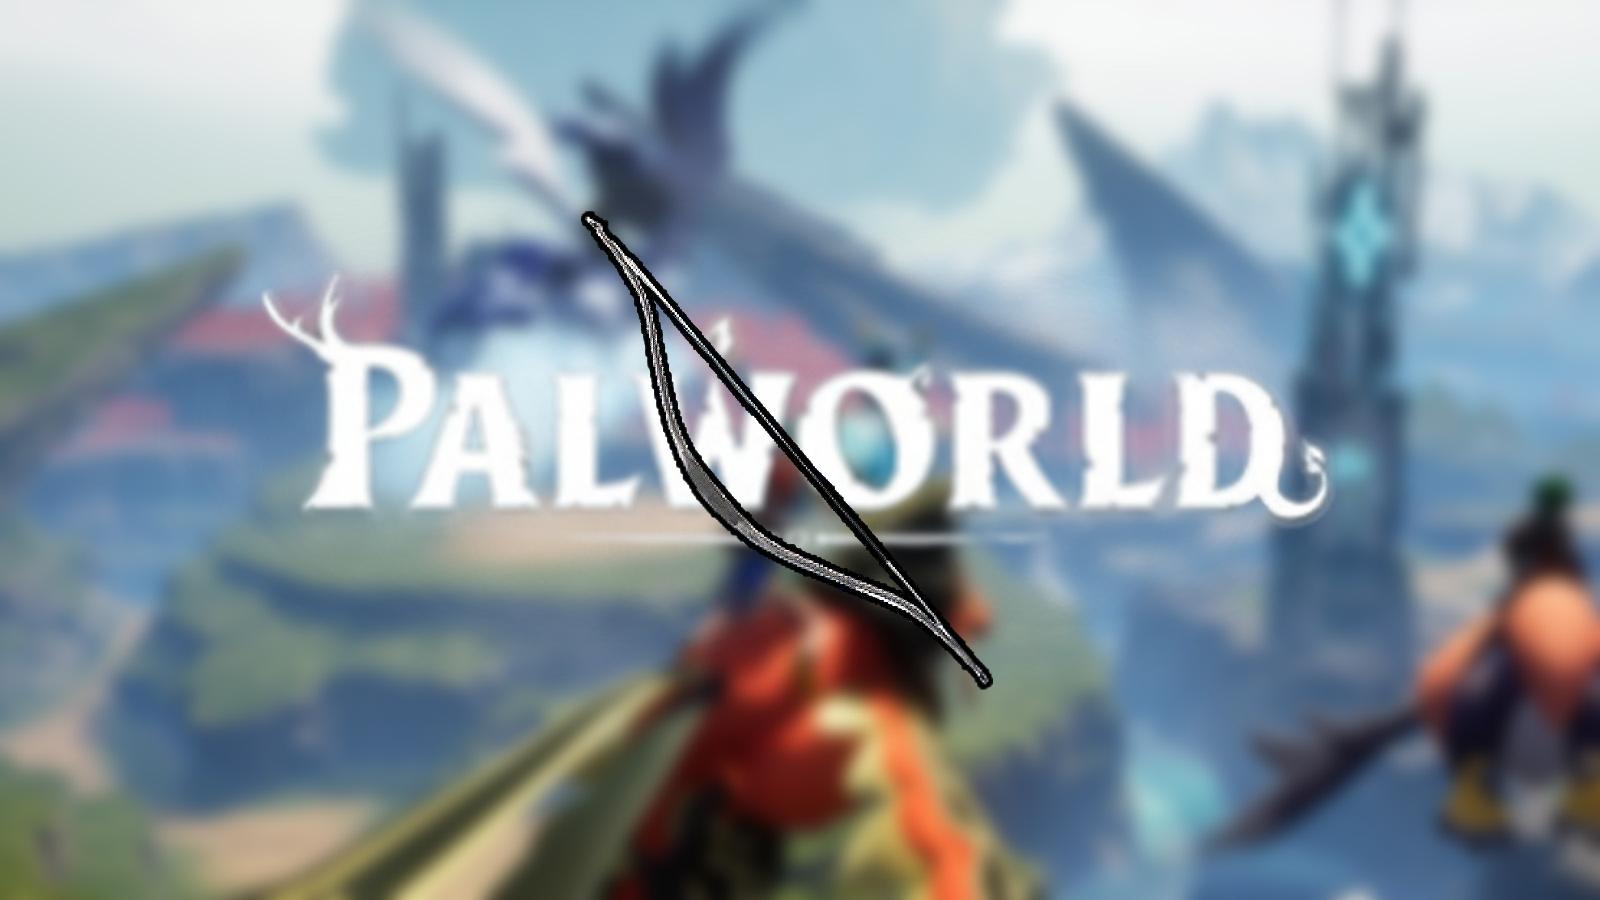 Palworld Old Bow